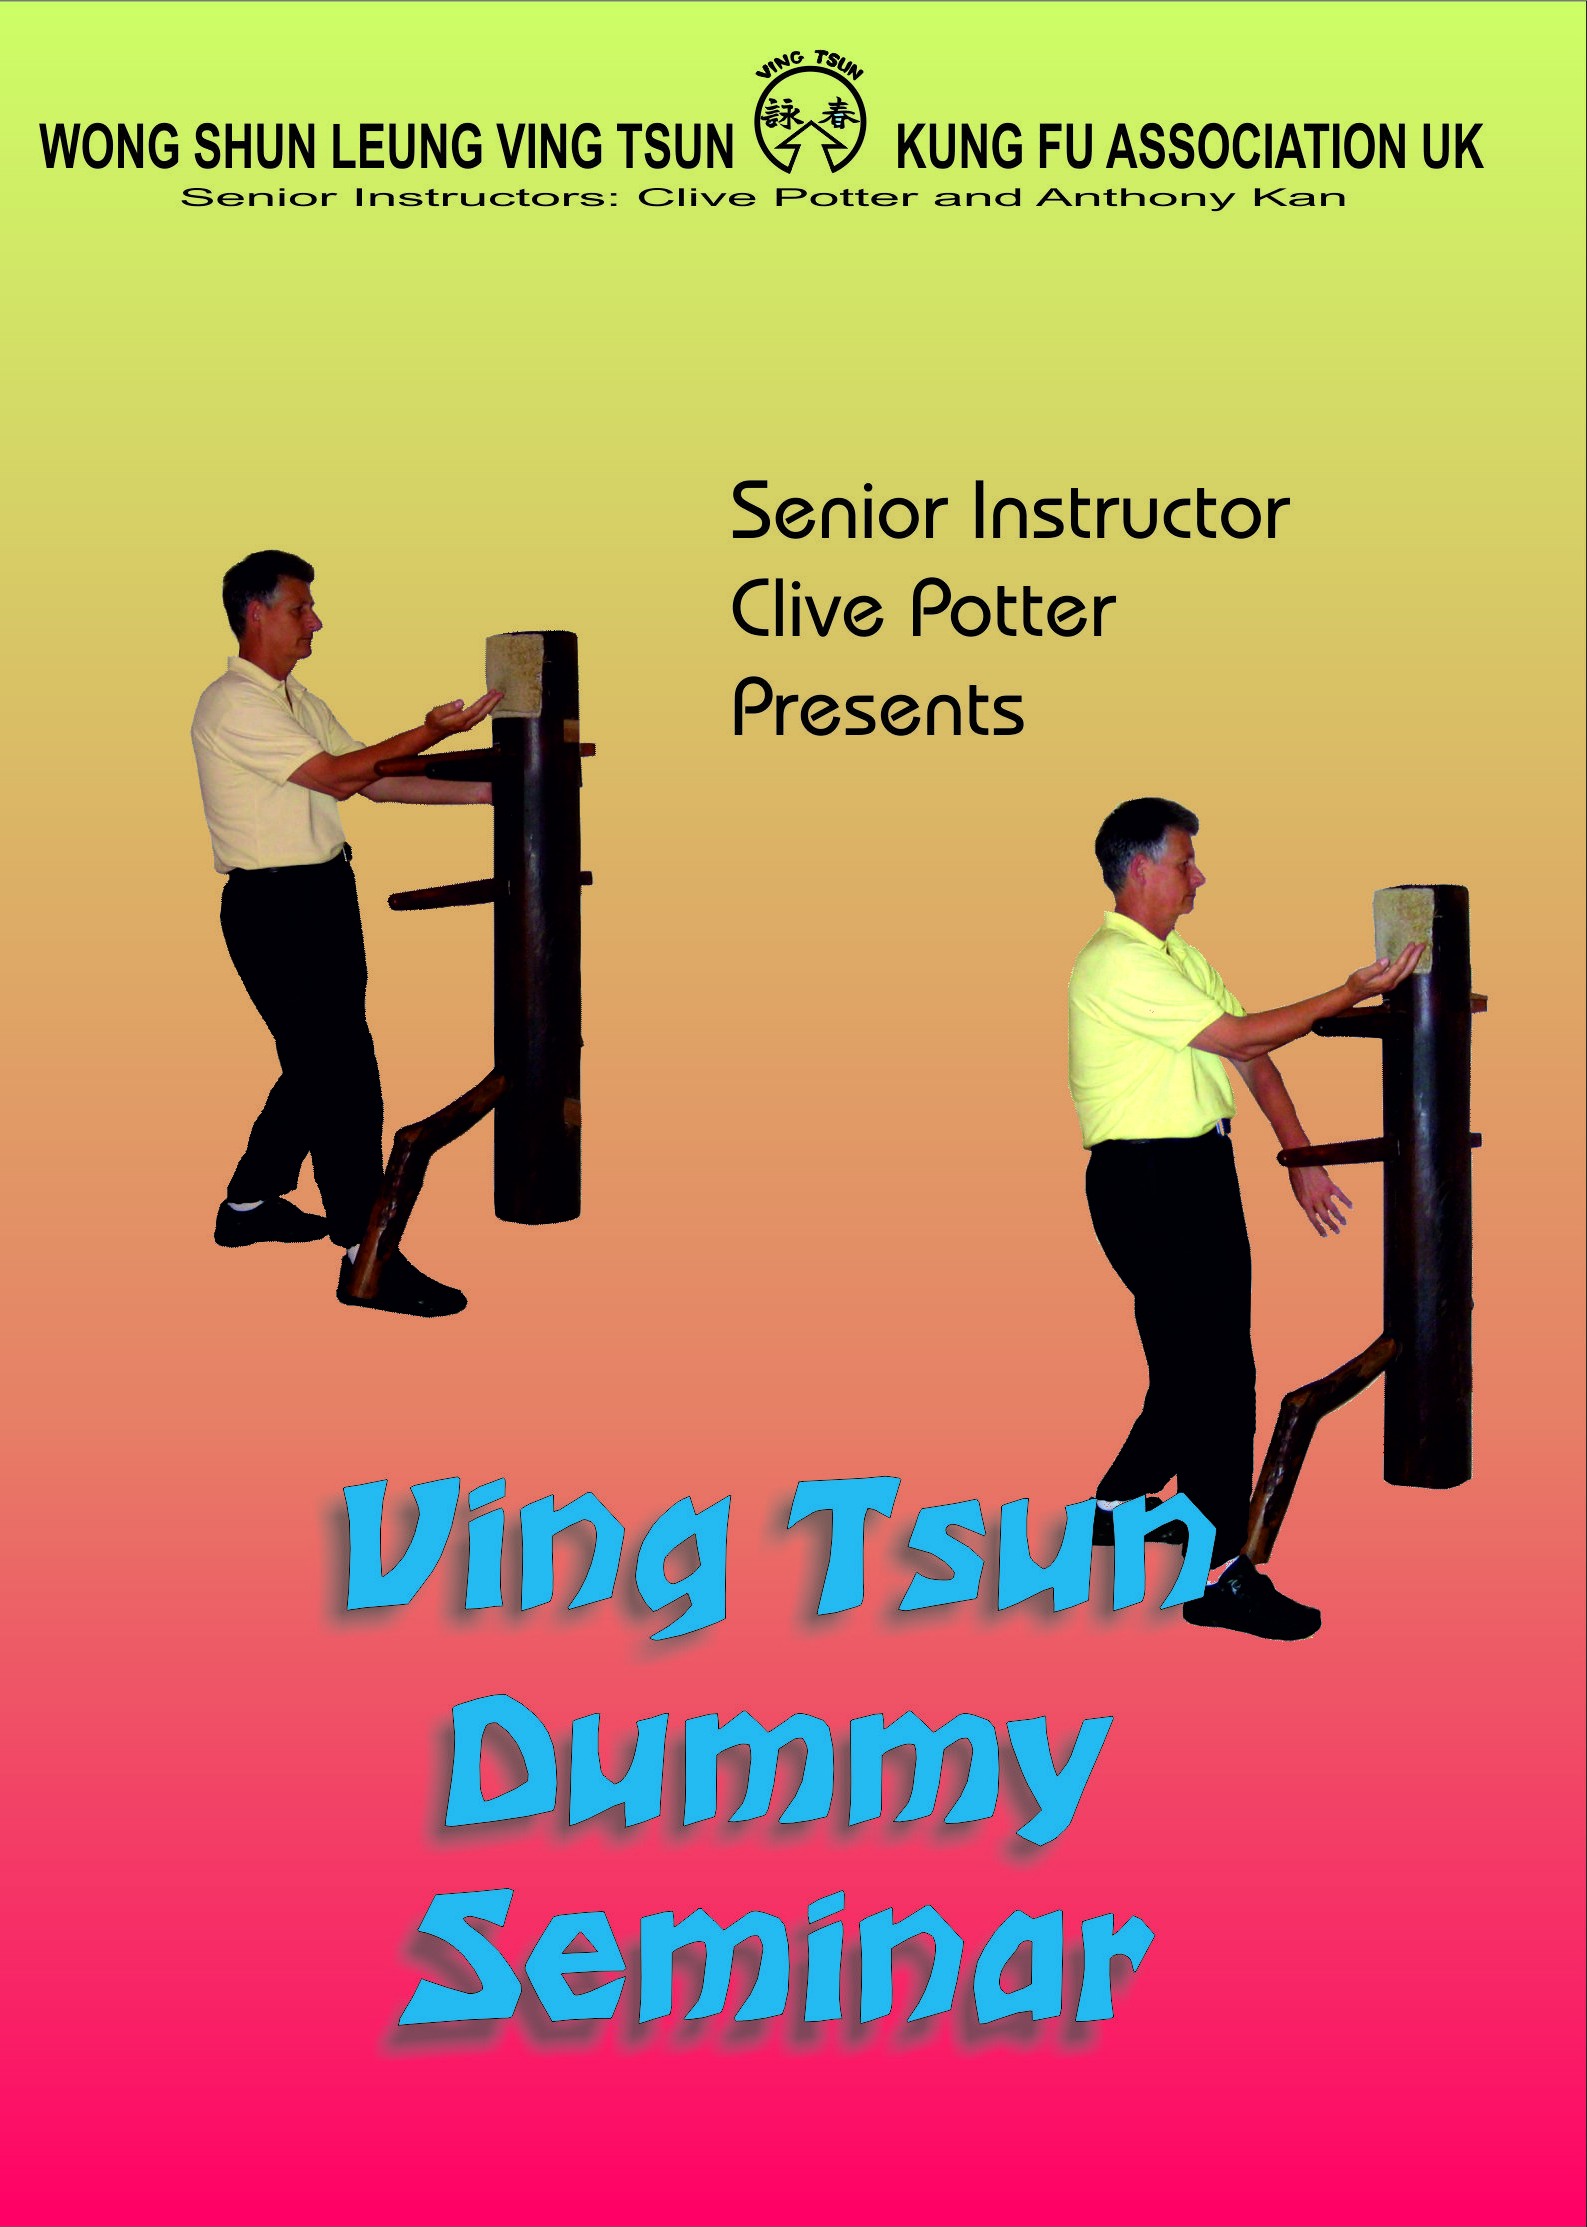 Review – Clive Potter’s Ving Tsun Dummy Seminar DVD